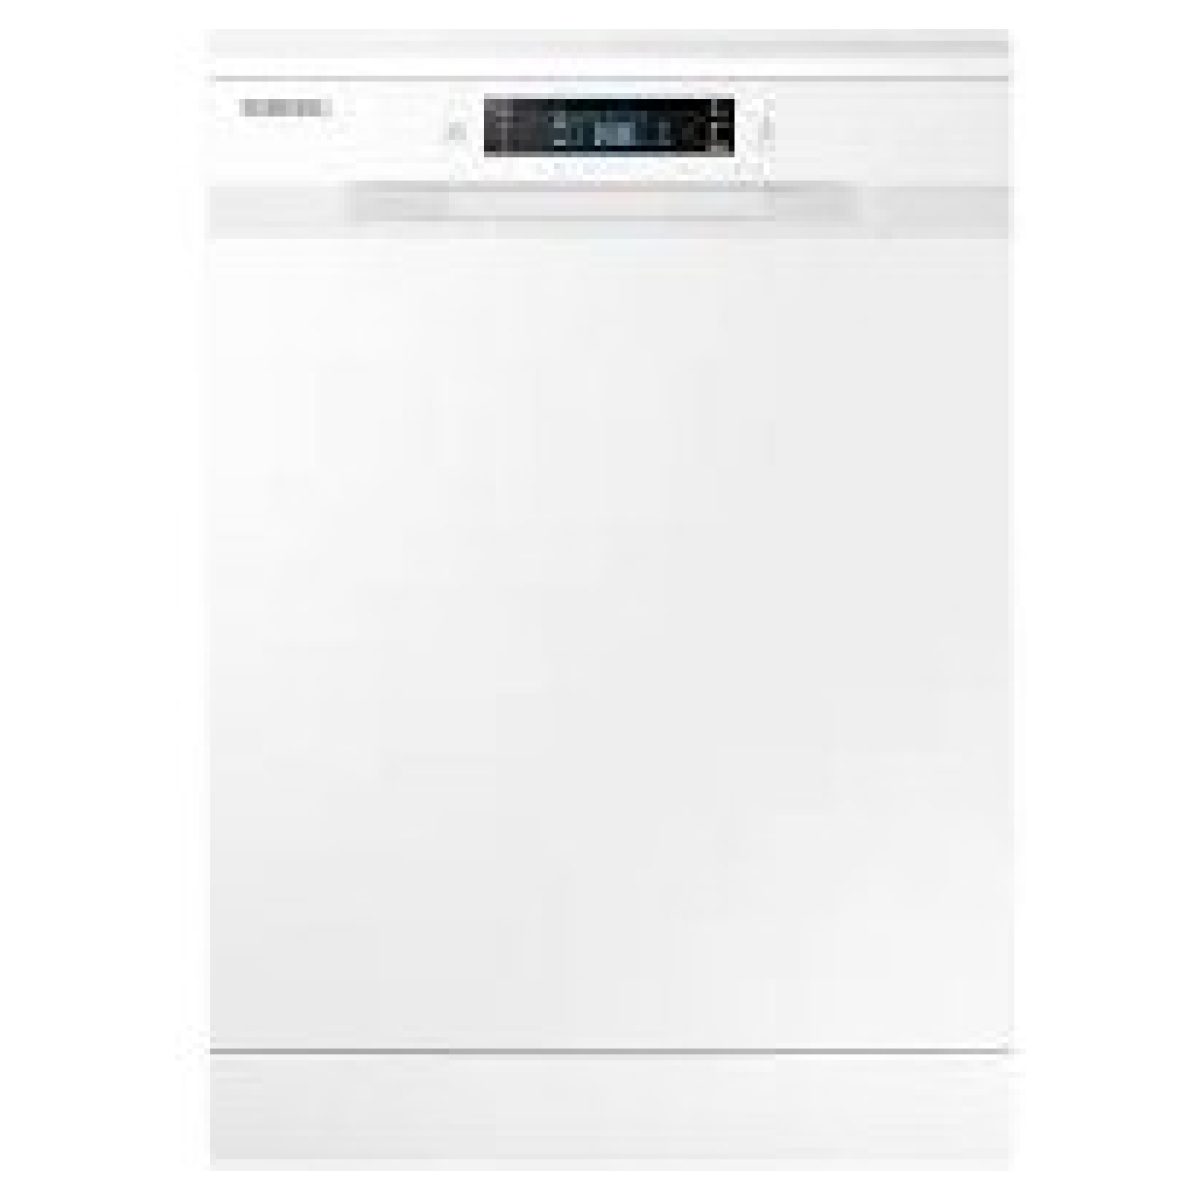 Thomson dish washer TDW12W1 white 11 Program | Dish washer | Home Appliances